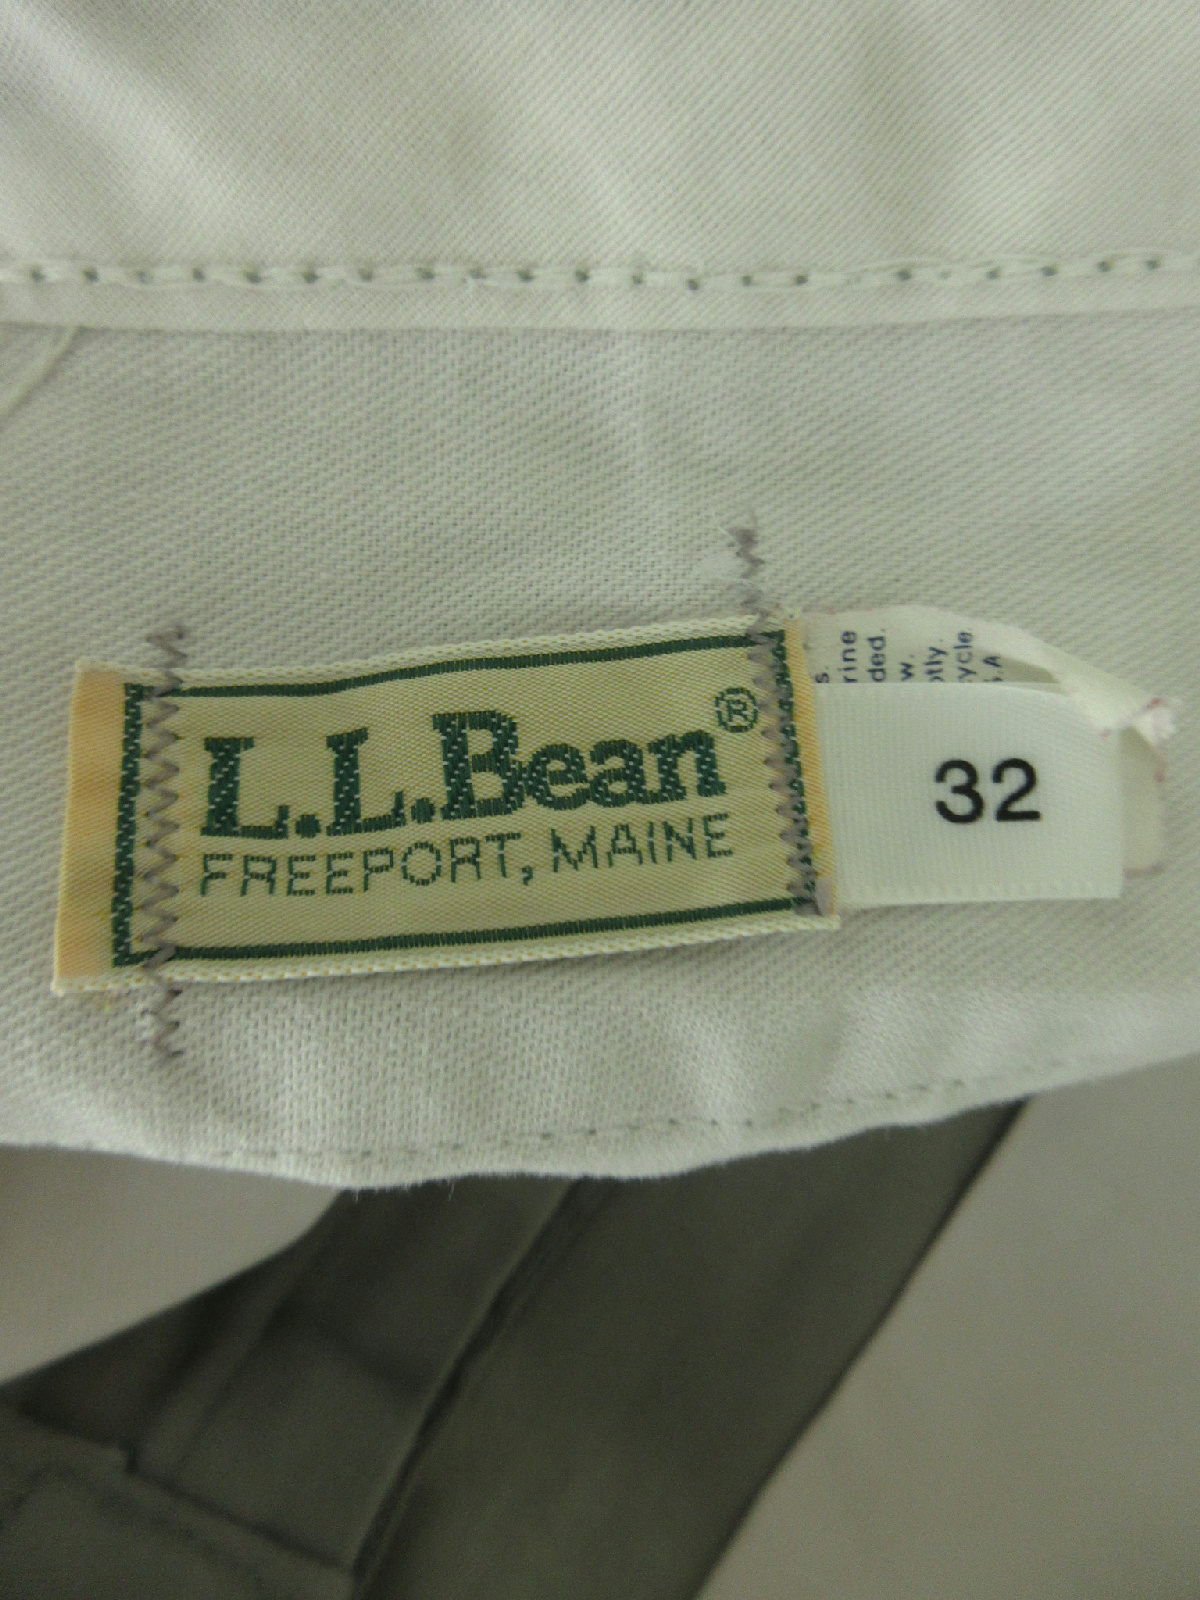 Ll Bean Return Shipping Label - Best Label Ideas 2019